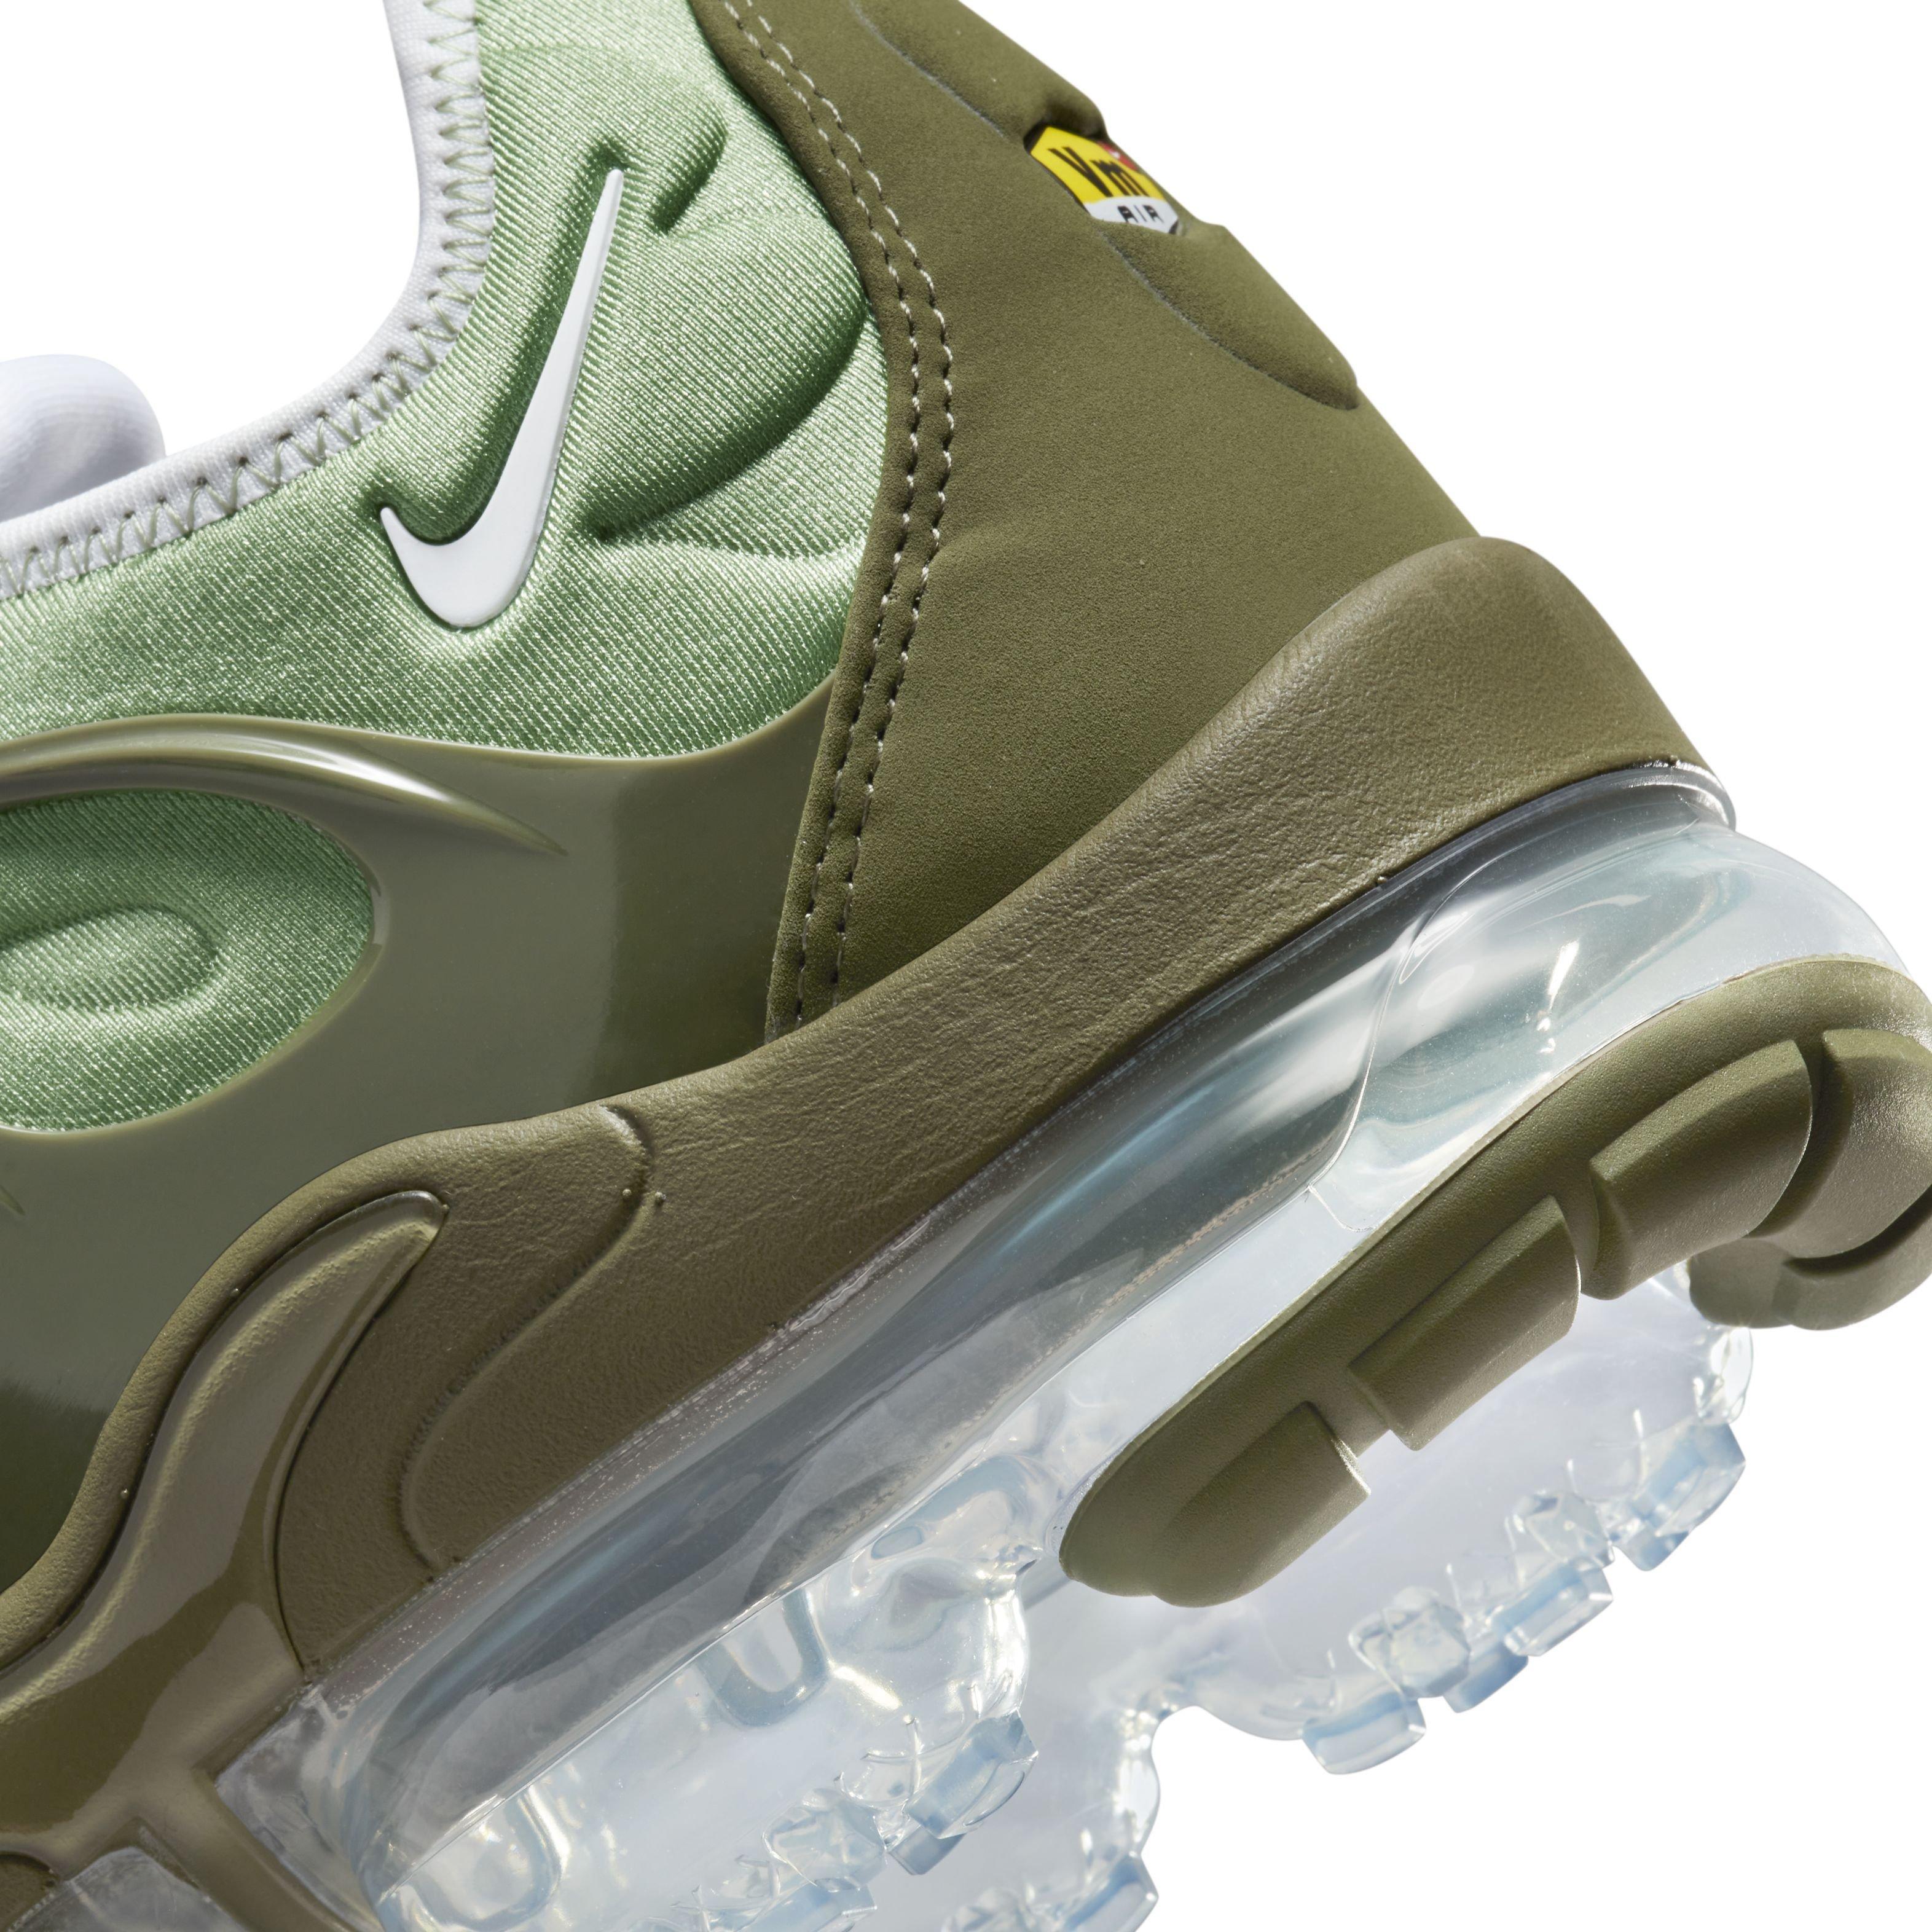 Marty Fielding seco italiano Nike Air VaporMax Plus "Oil Green/White/Medium Olive" Men's Shoe